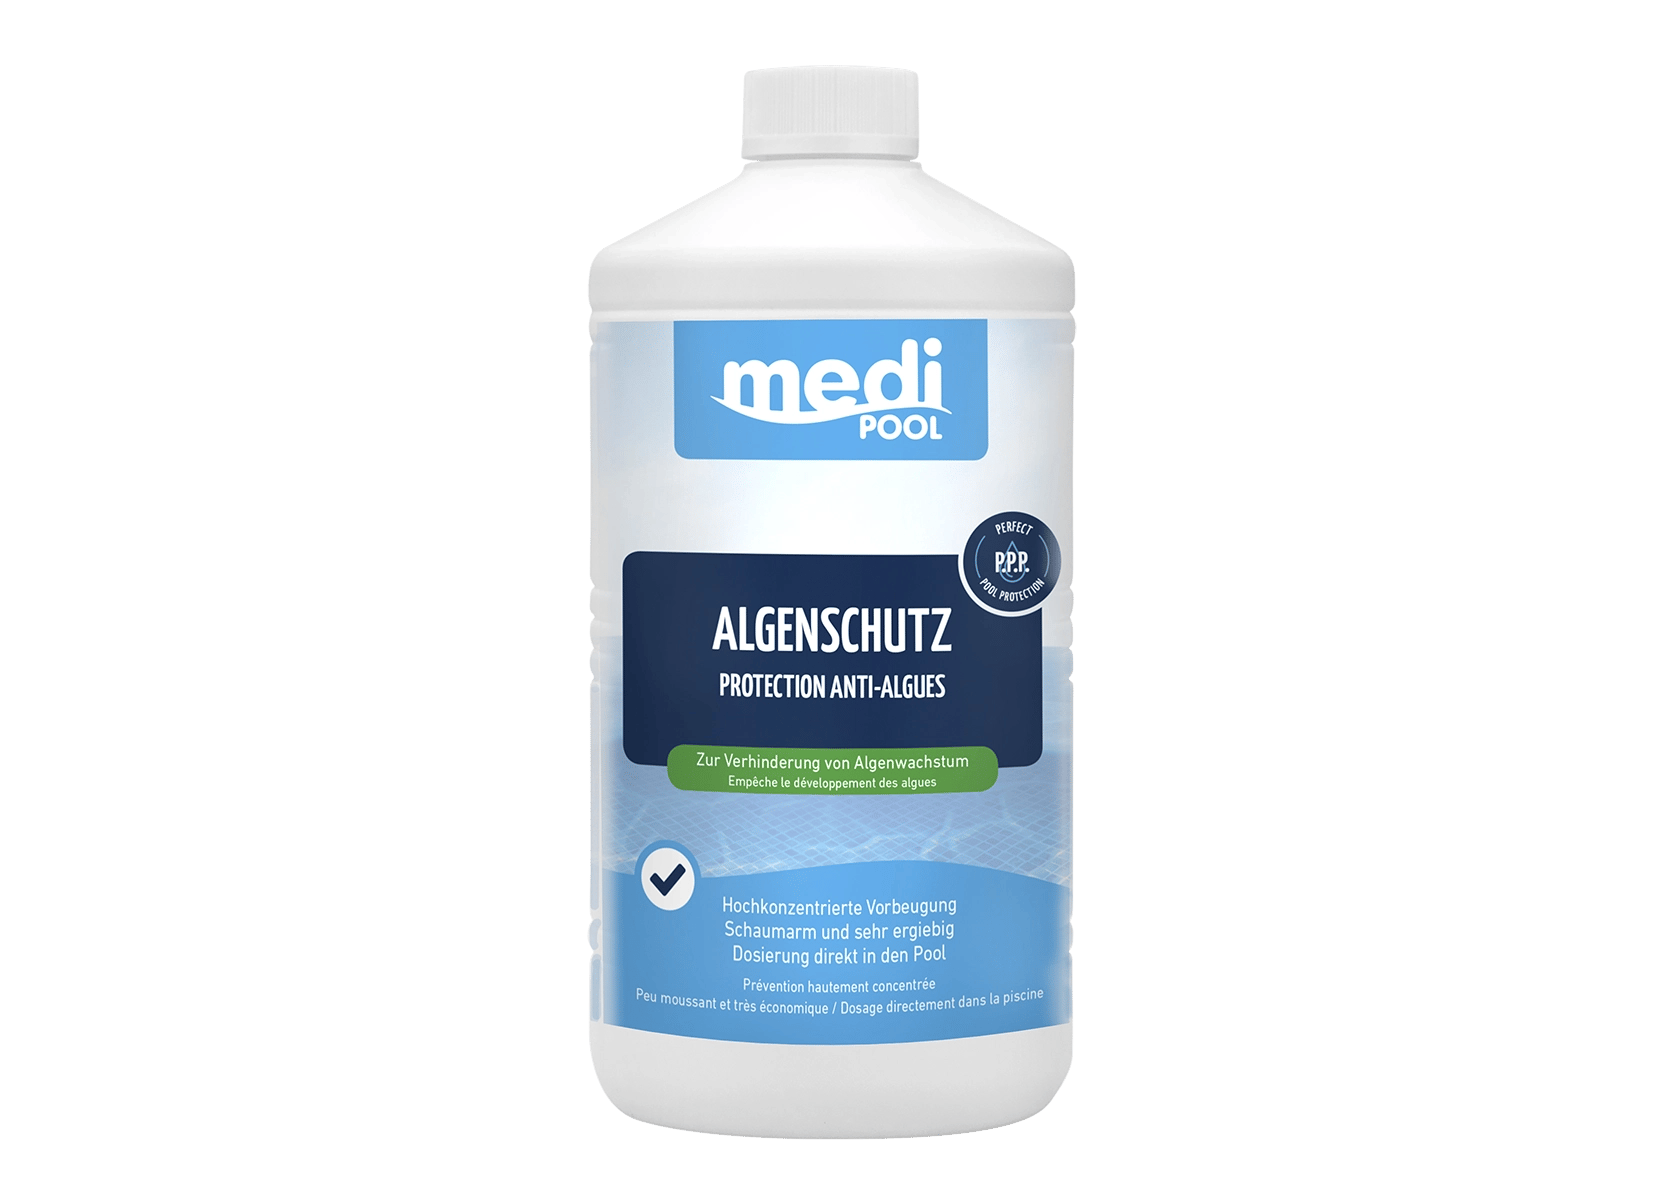 medi Pool Algenschutz 1 Liter